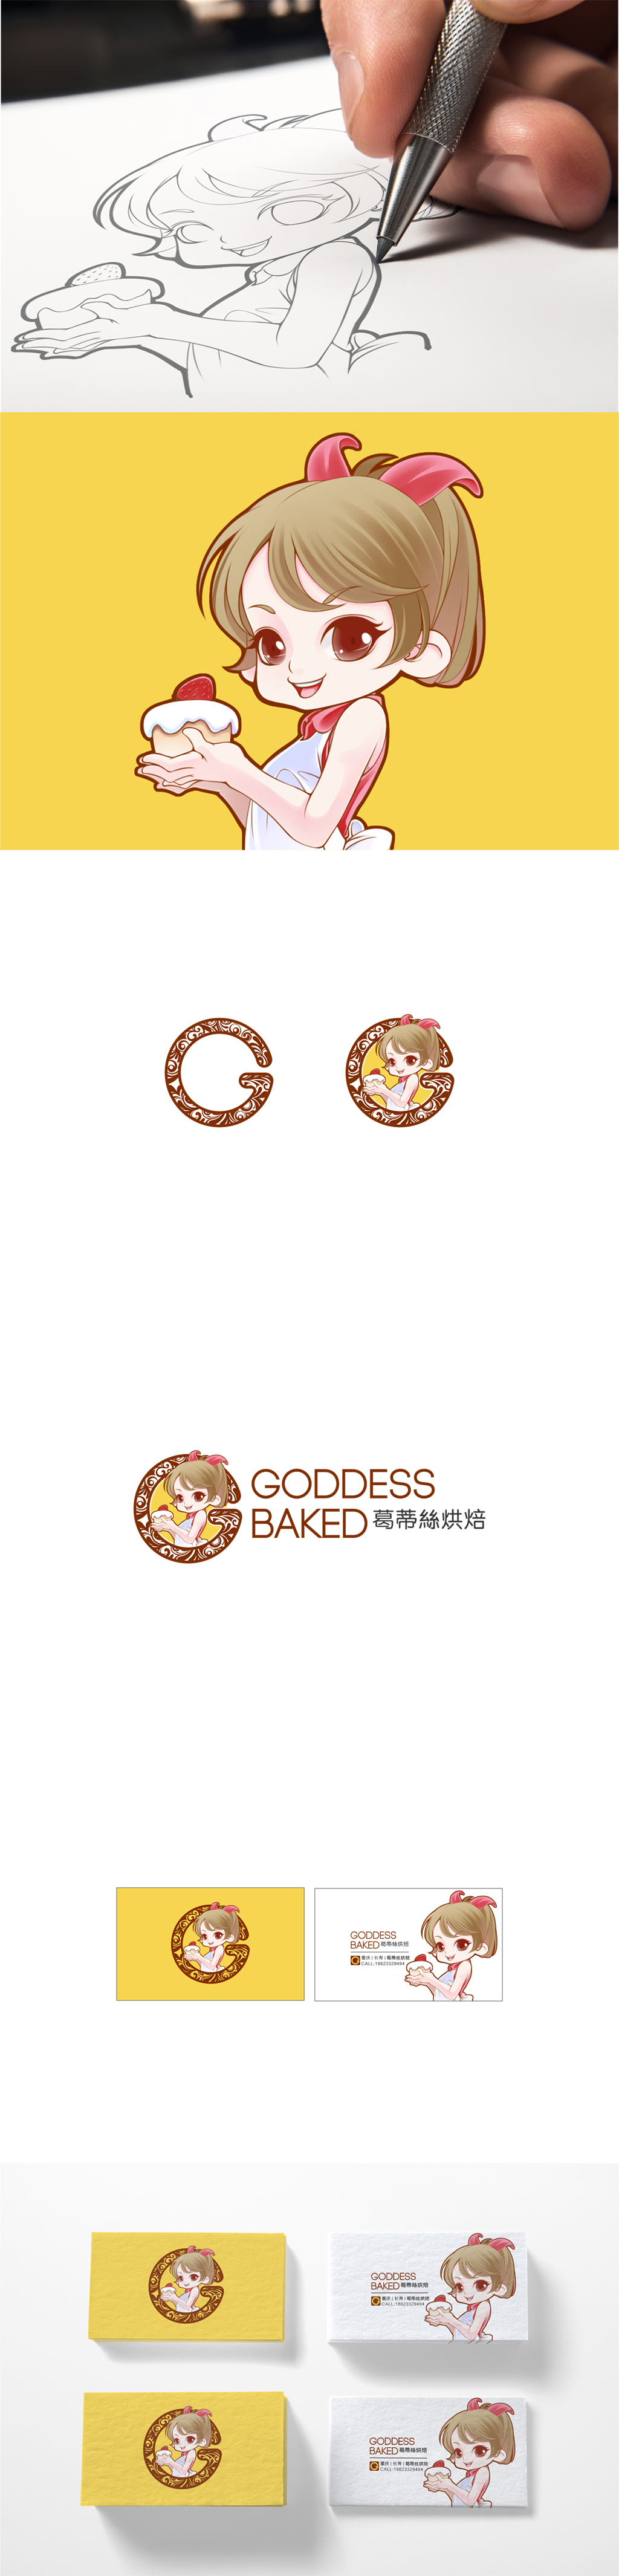 Goddess/葛蒂丝烘焙图0